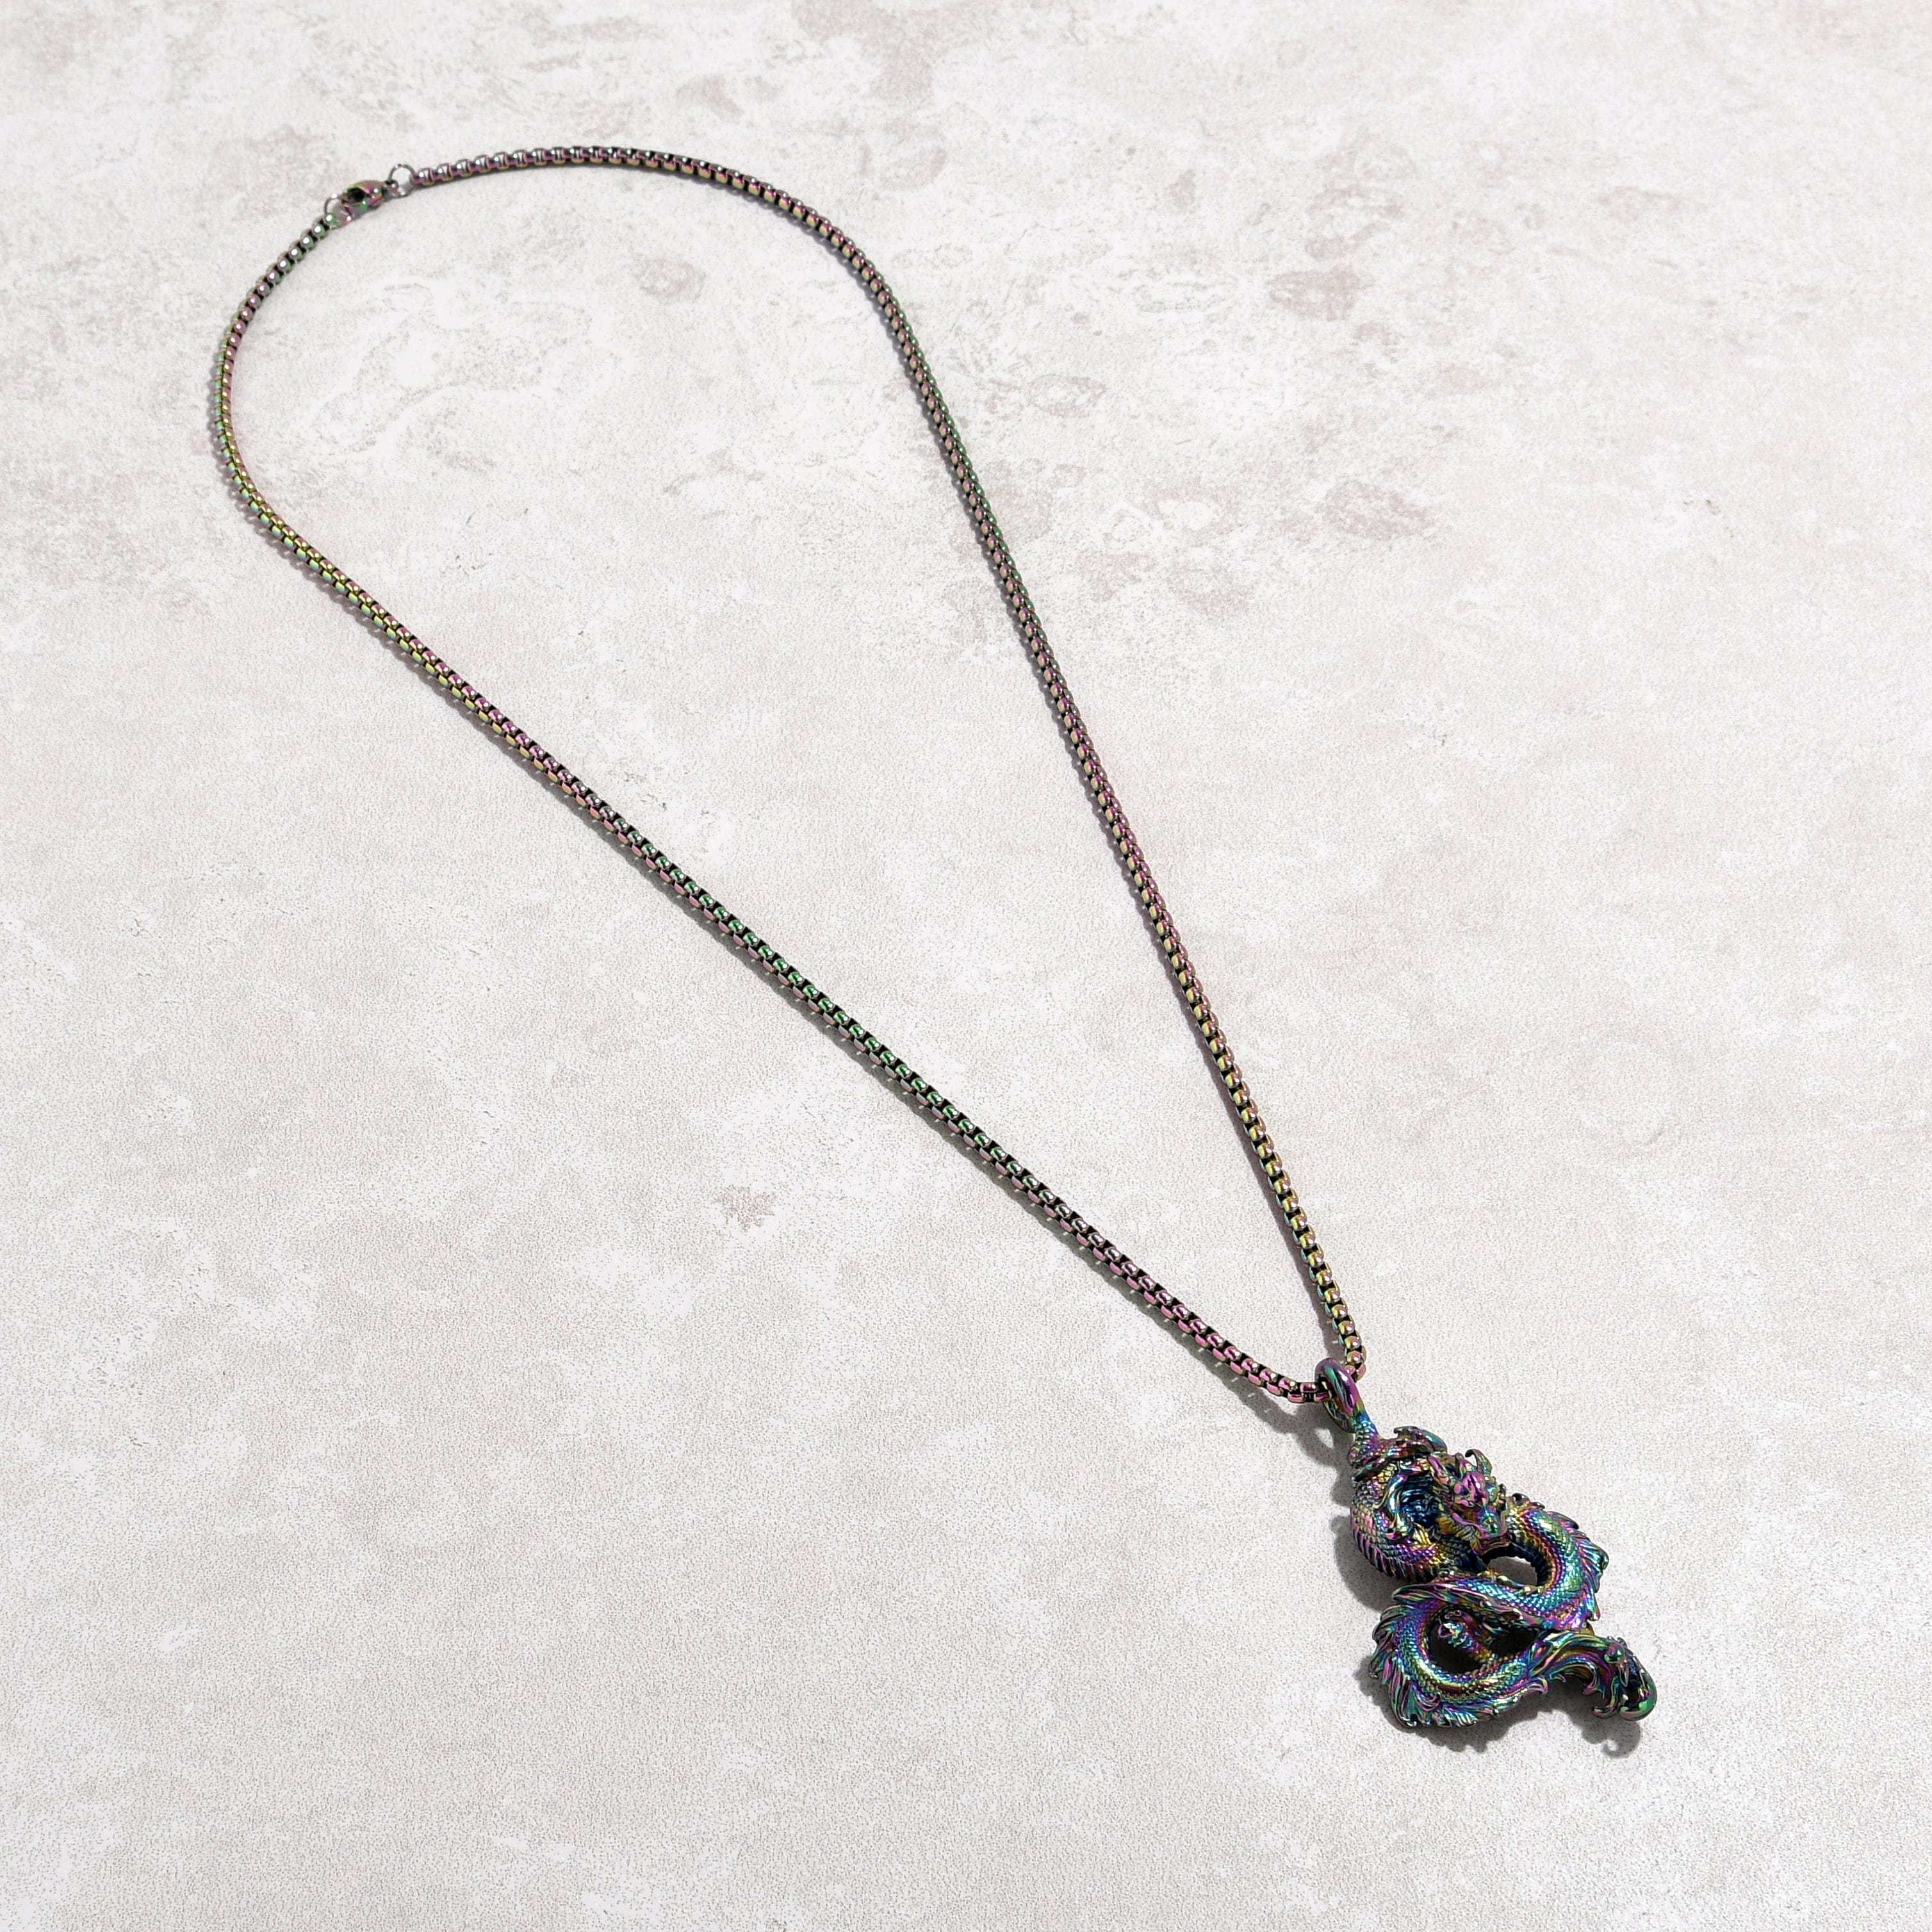 Kalifano Steel Hearts Jewelry Aurora Borealis Dragon Steel Hearts Necklace SHN516-AB